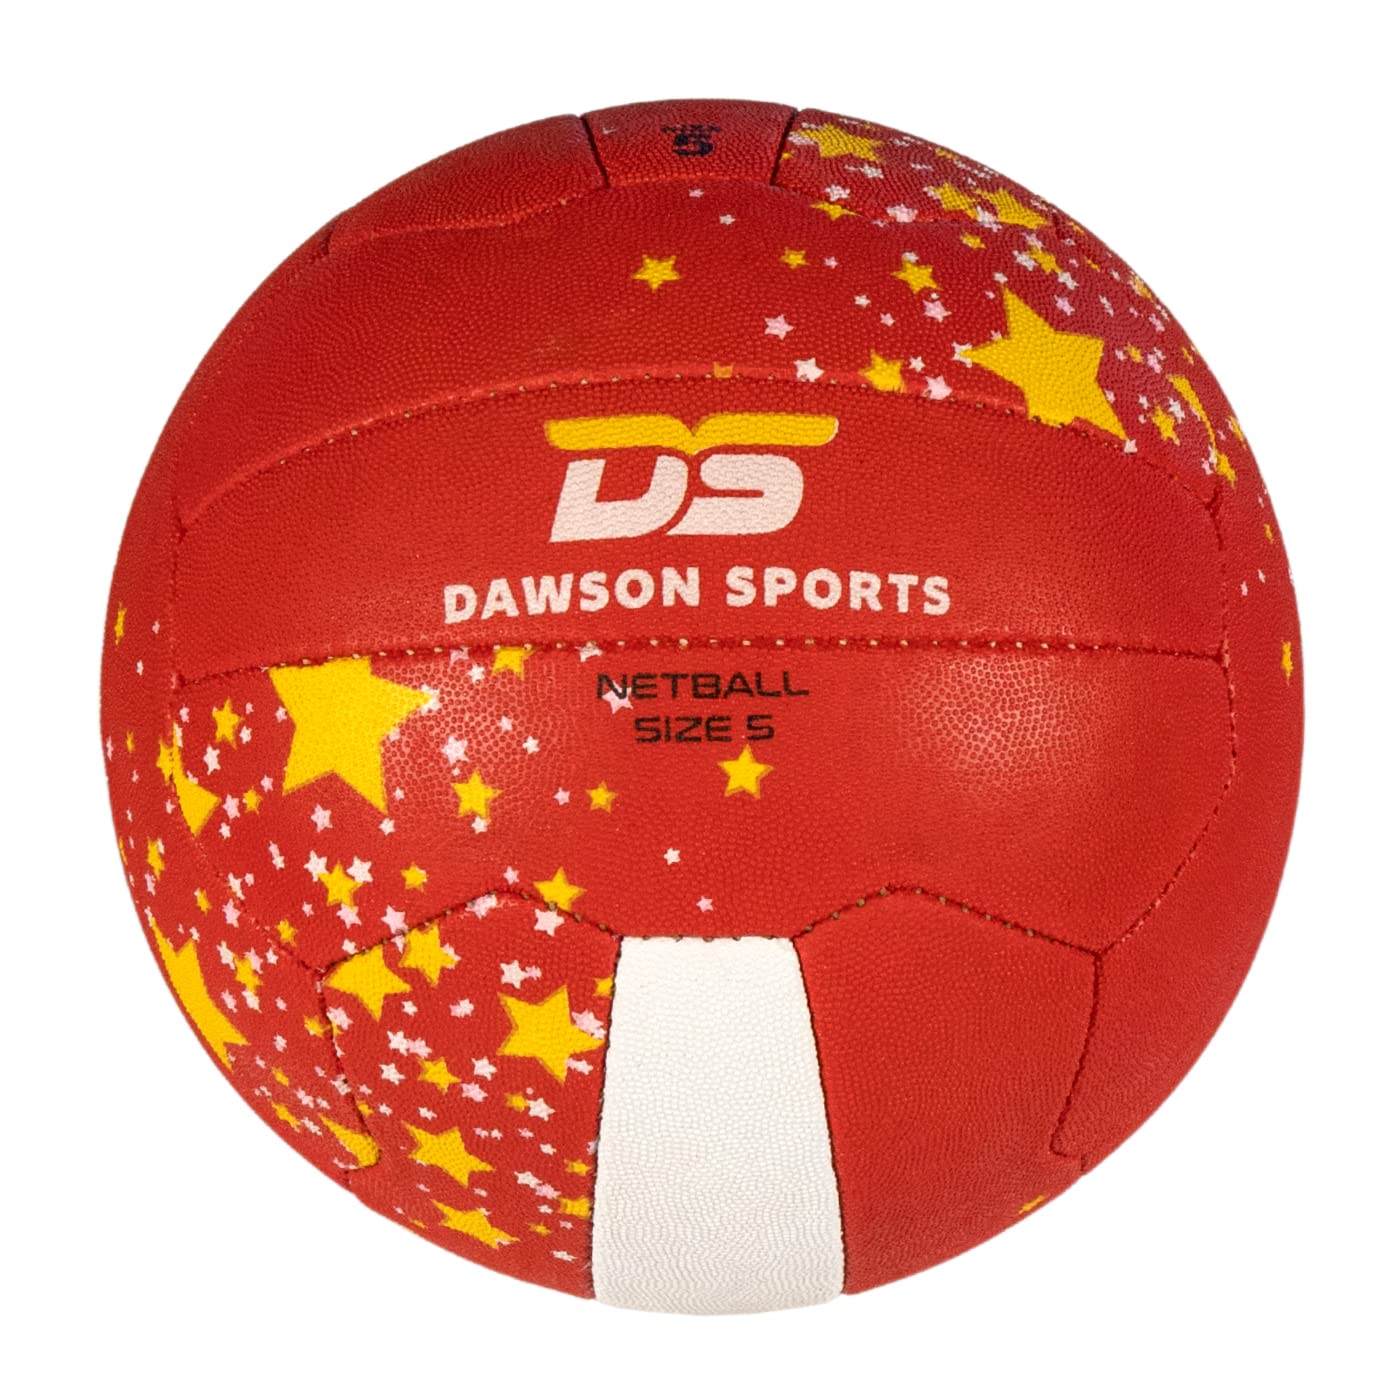 Dawson Sports Star Trainer Netball - Size 5